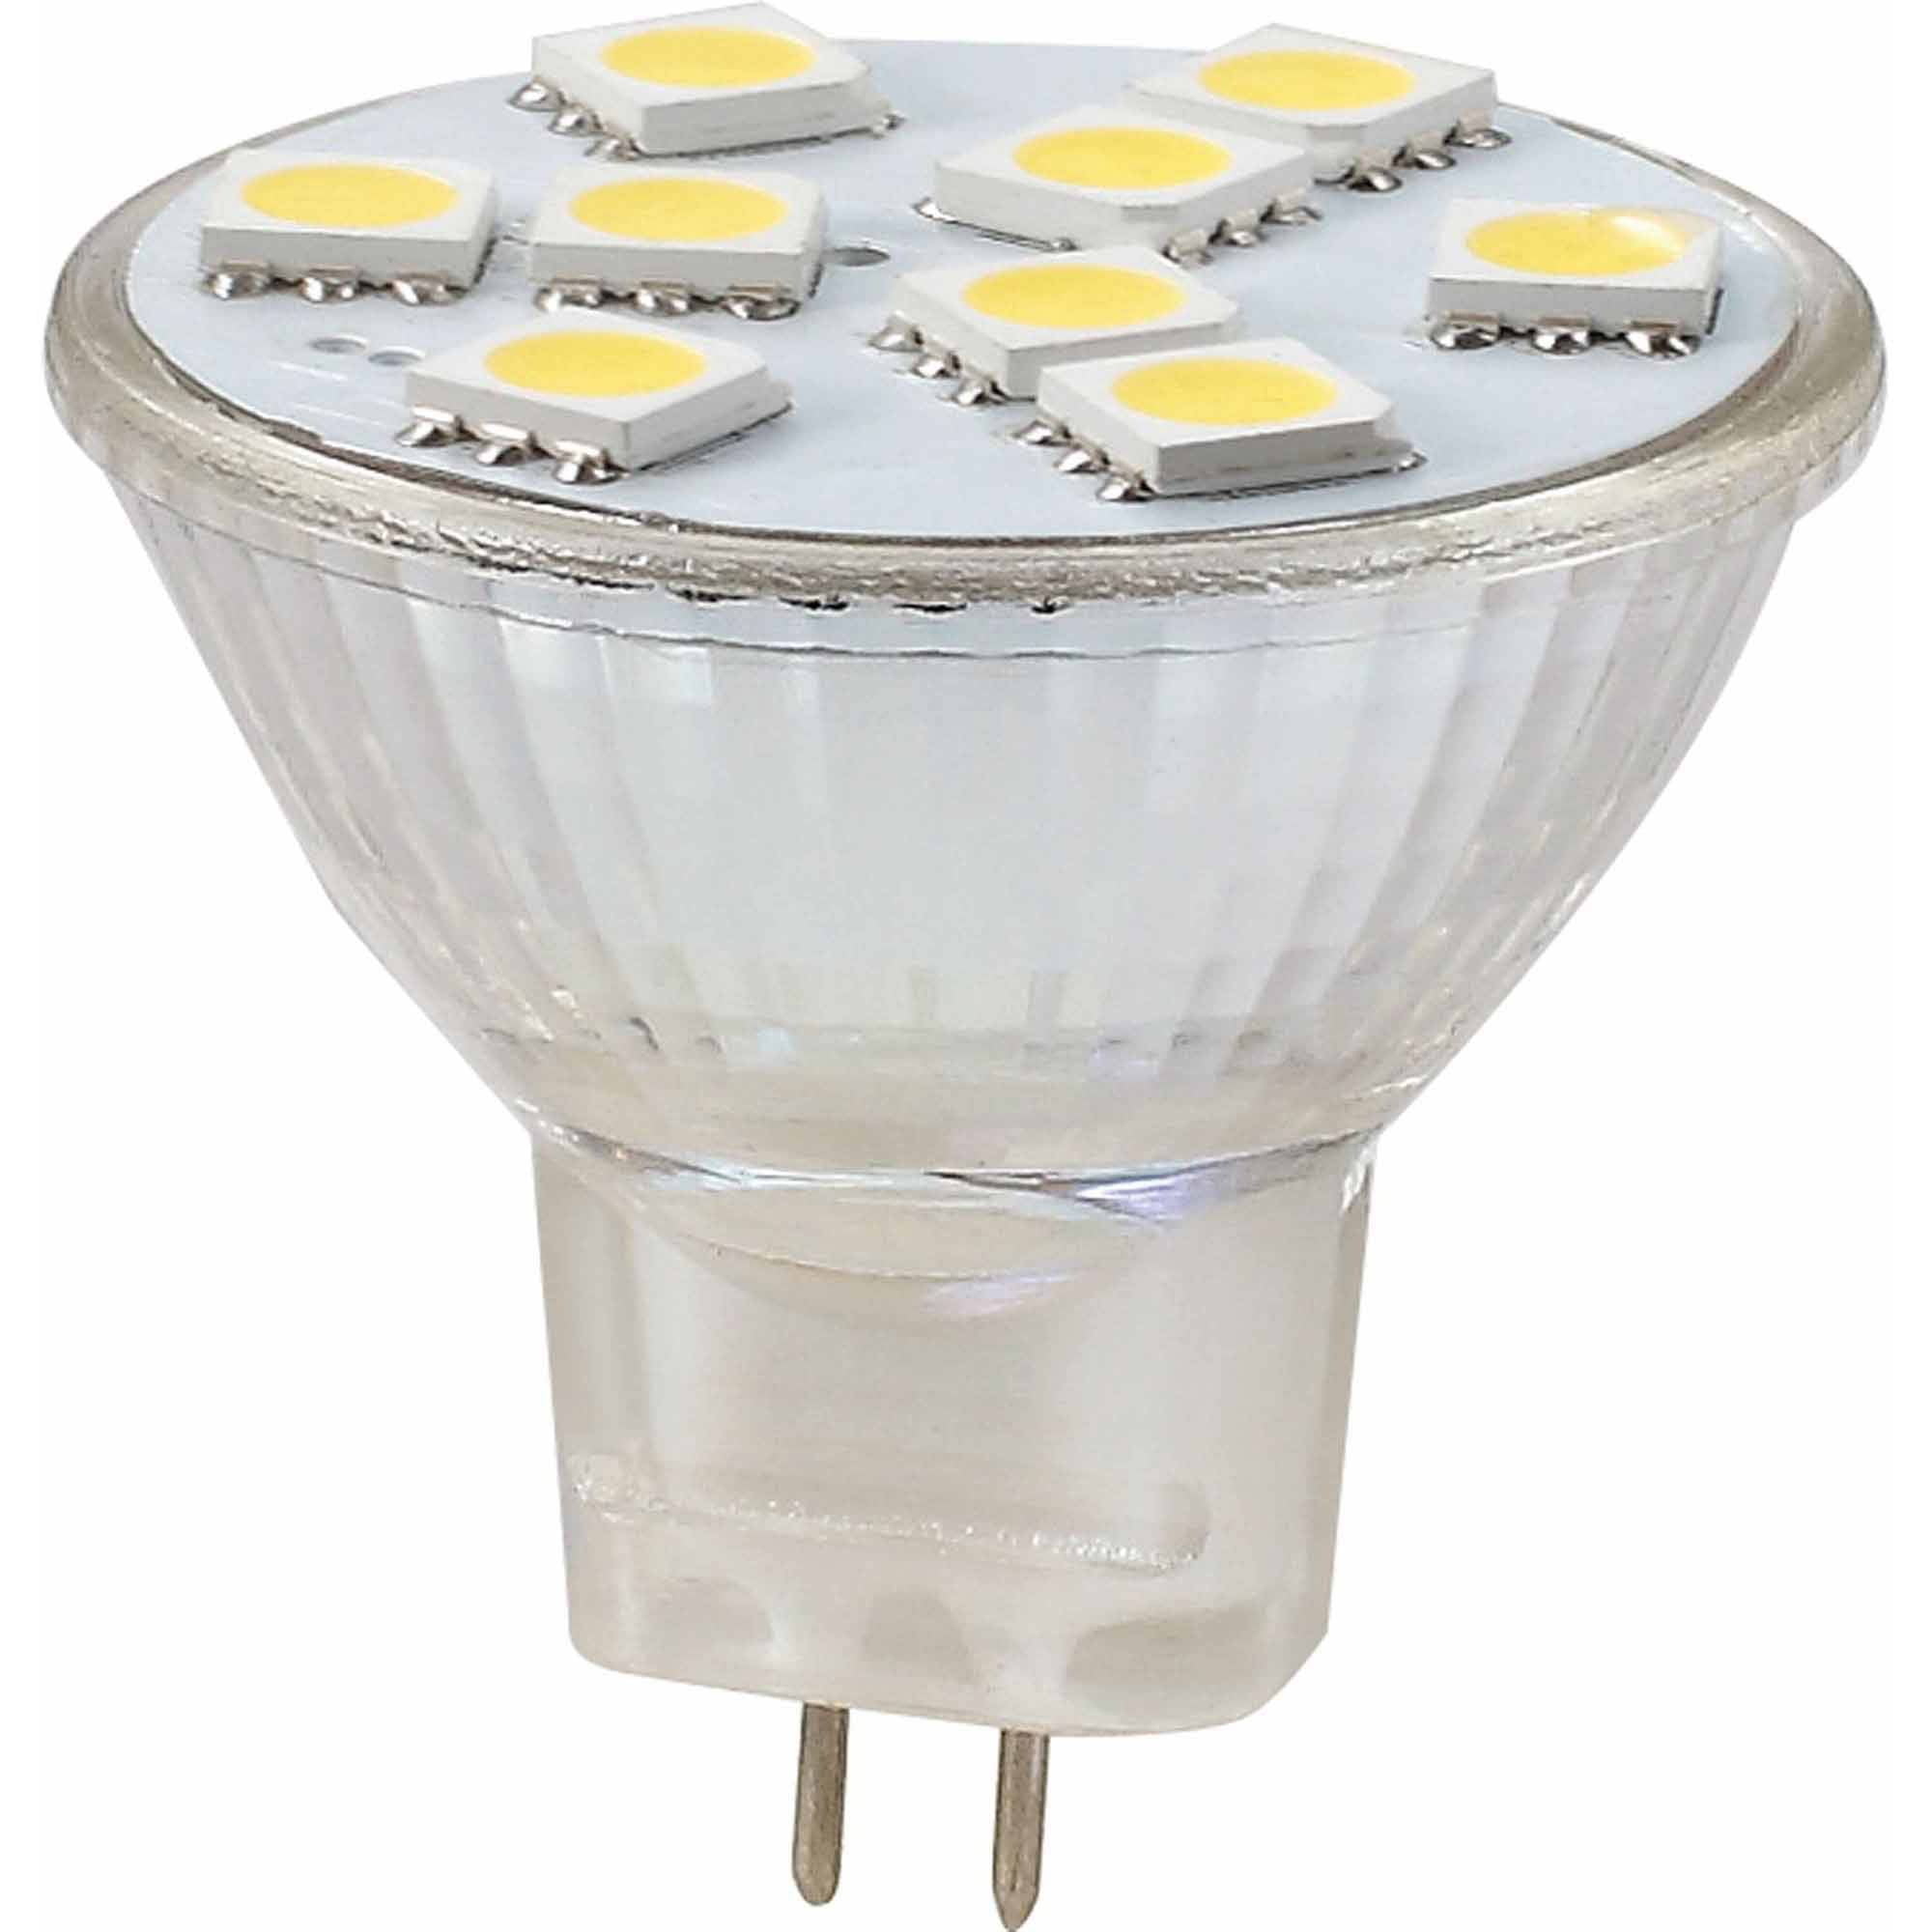 Ming's Mark 12V LED Bulb with MR11 Base, 96 Lumens - Walmart.com